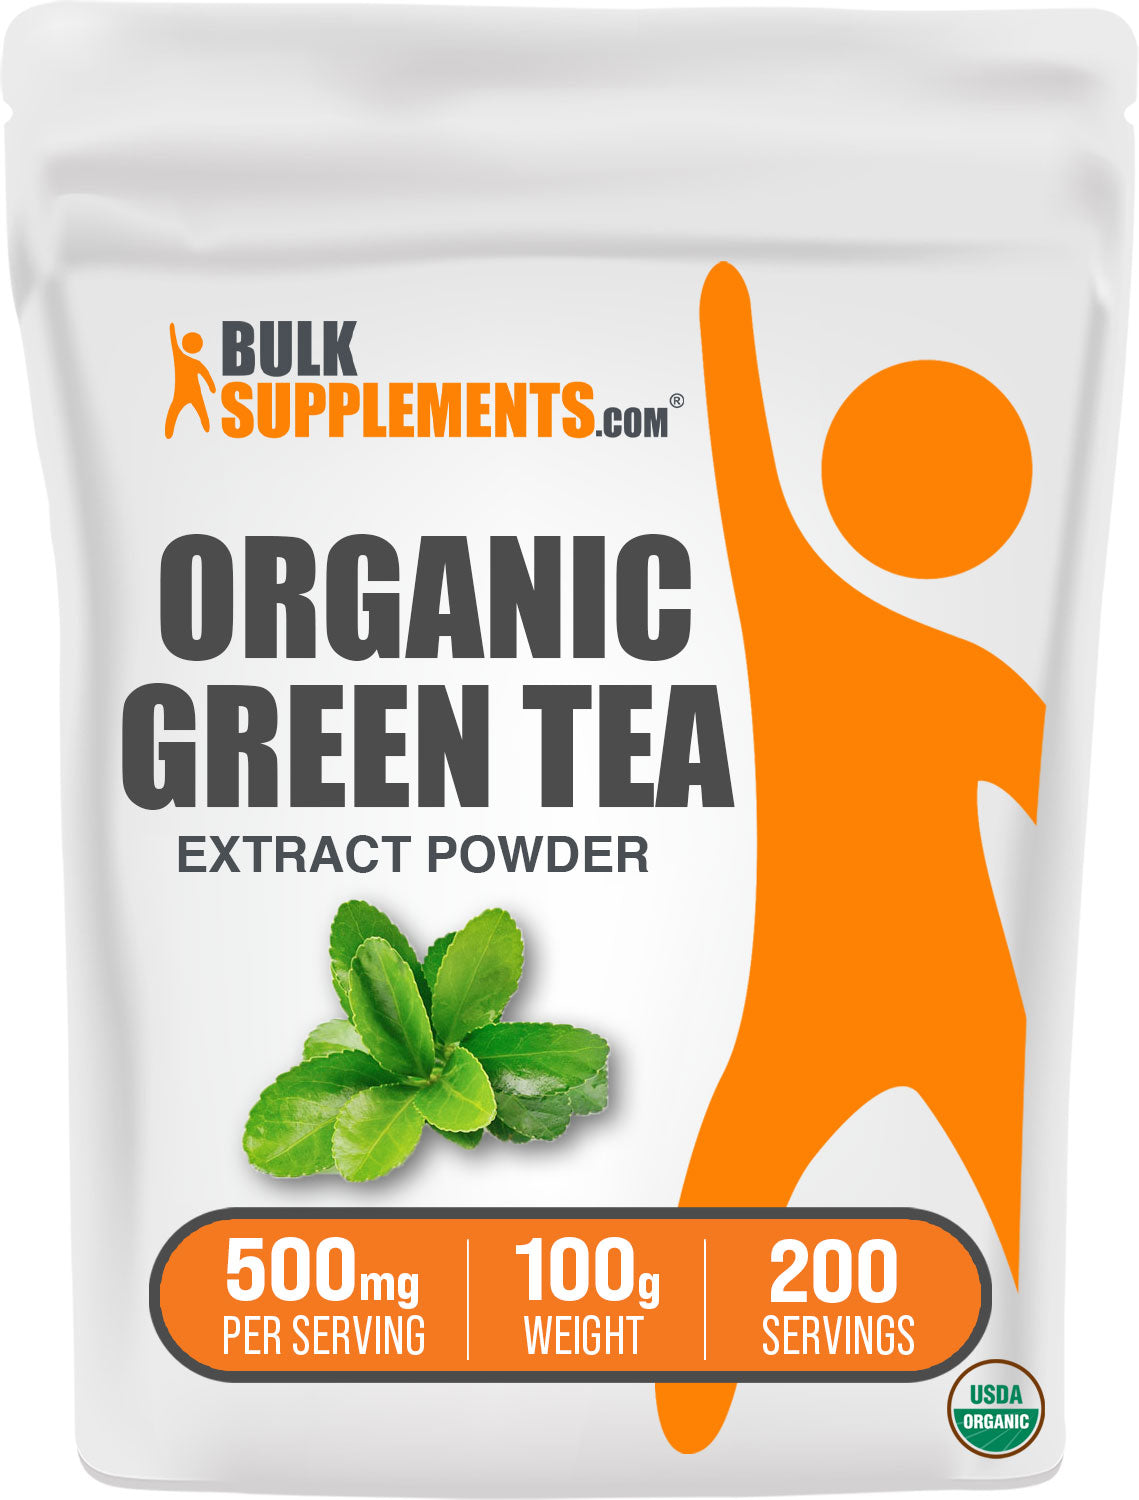 BulkSupplements.com Organic green tea extract powder 100g bag